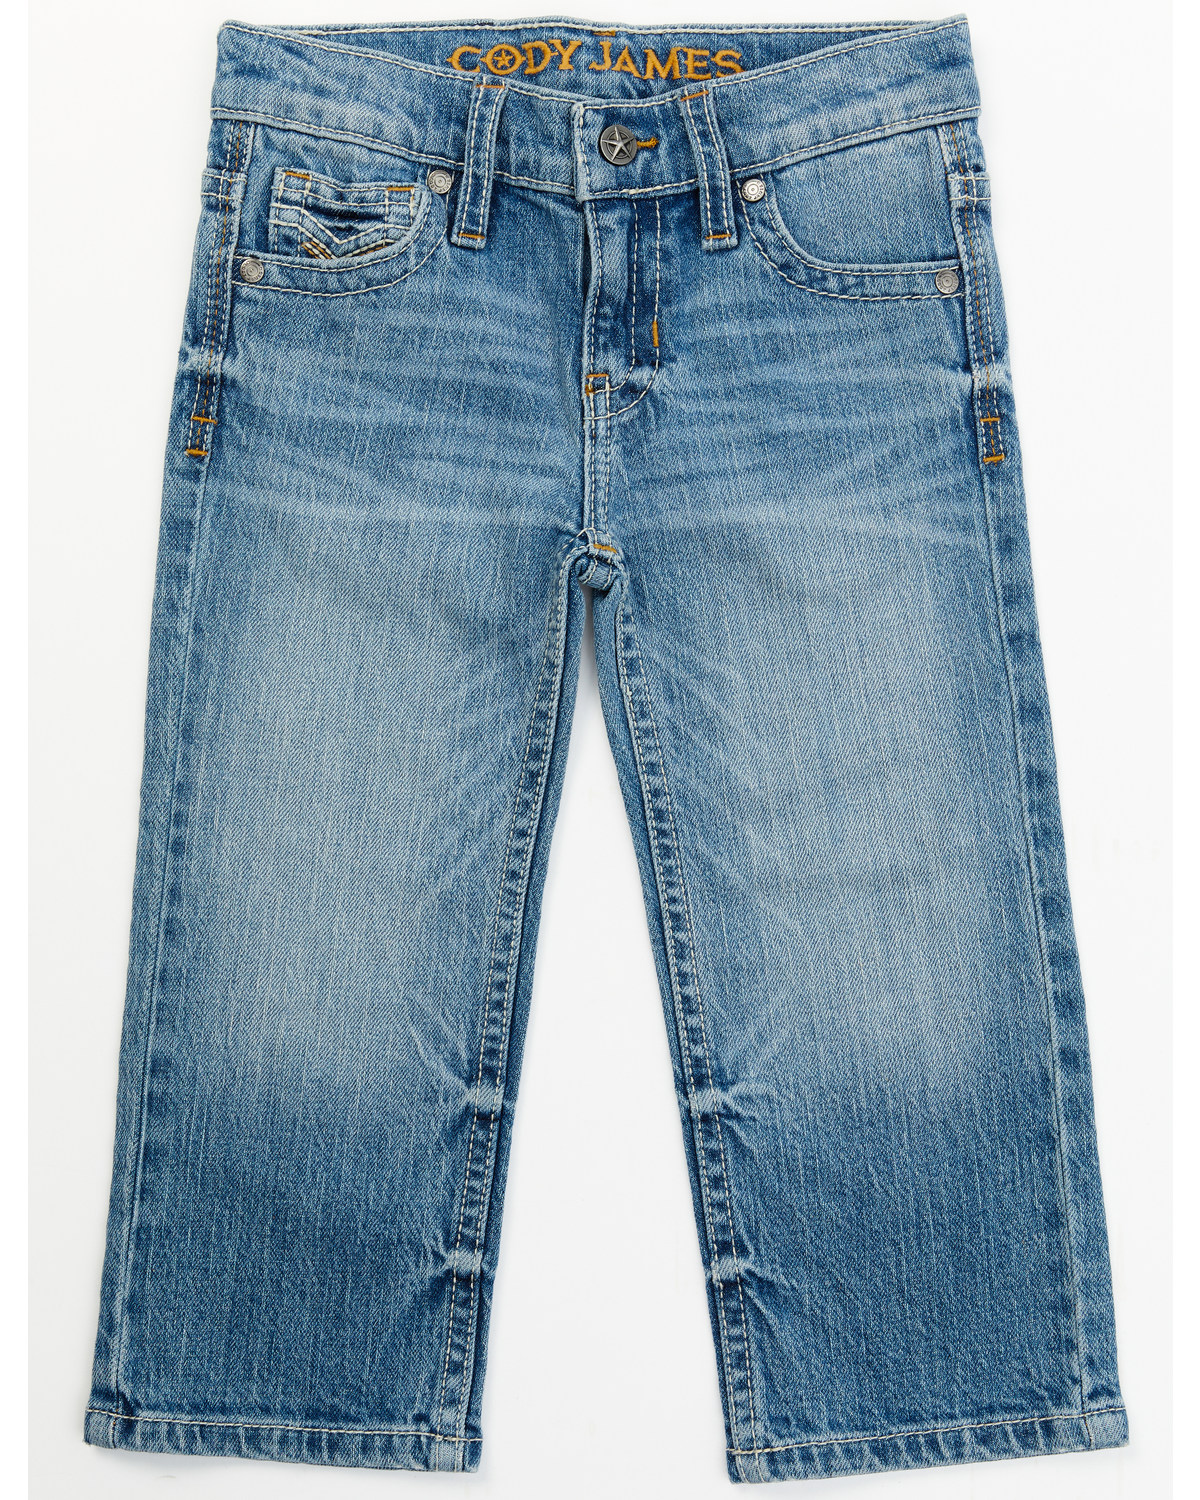 Cody James Toddler-Boys' Medium Wash Dalton Relaxed Bootcut Jeans